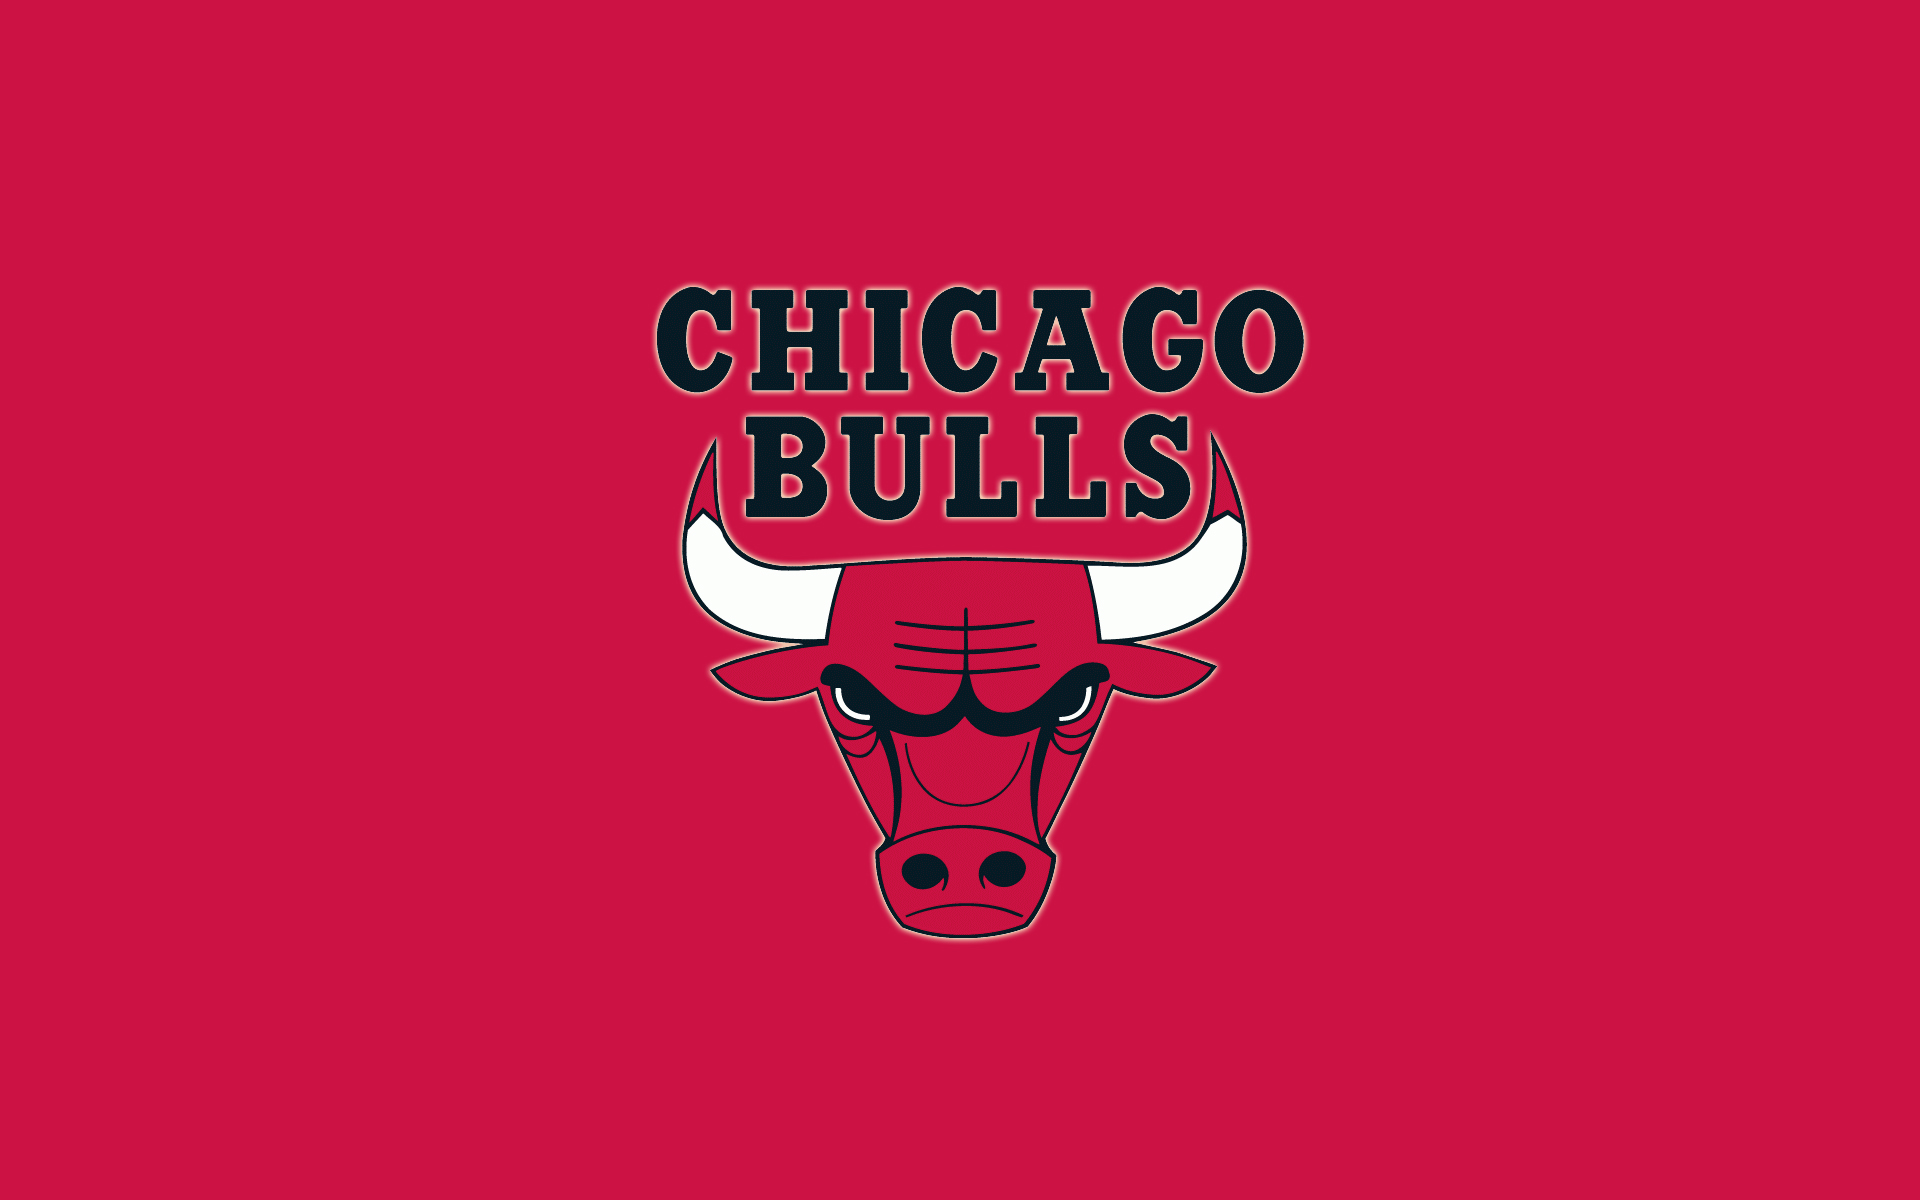 Chicago Bulls Wallpaper Desktop Theme cute Wallpapers